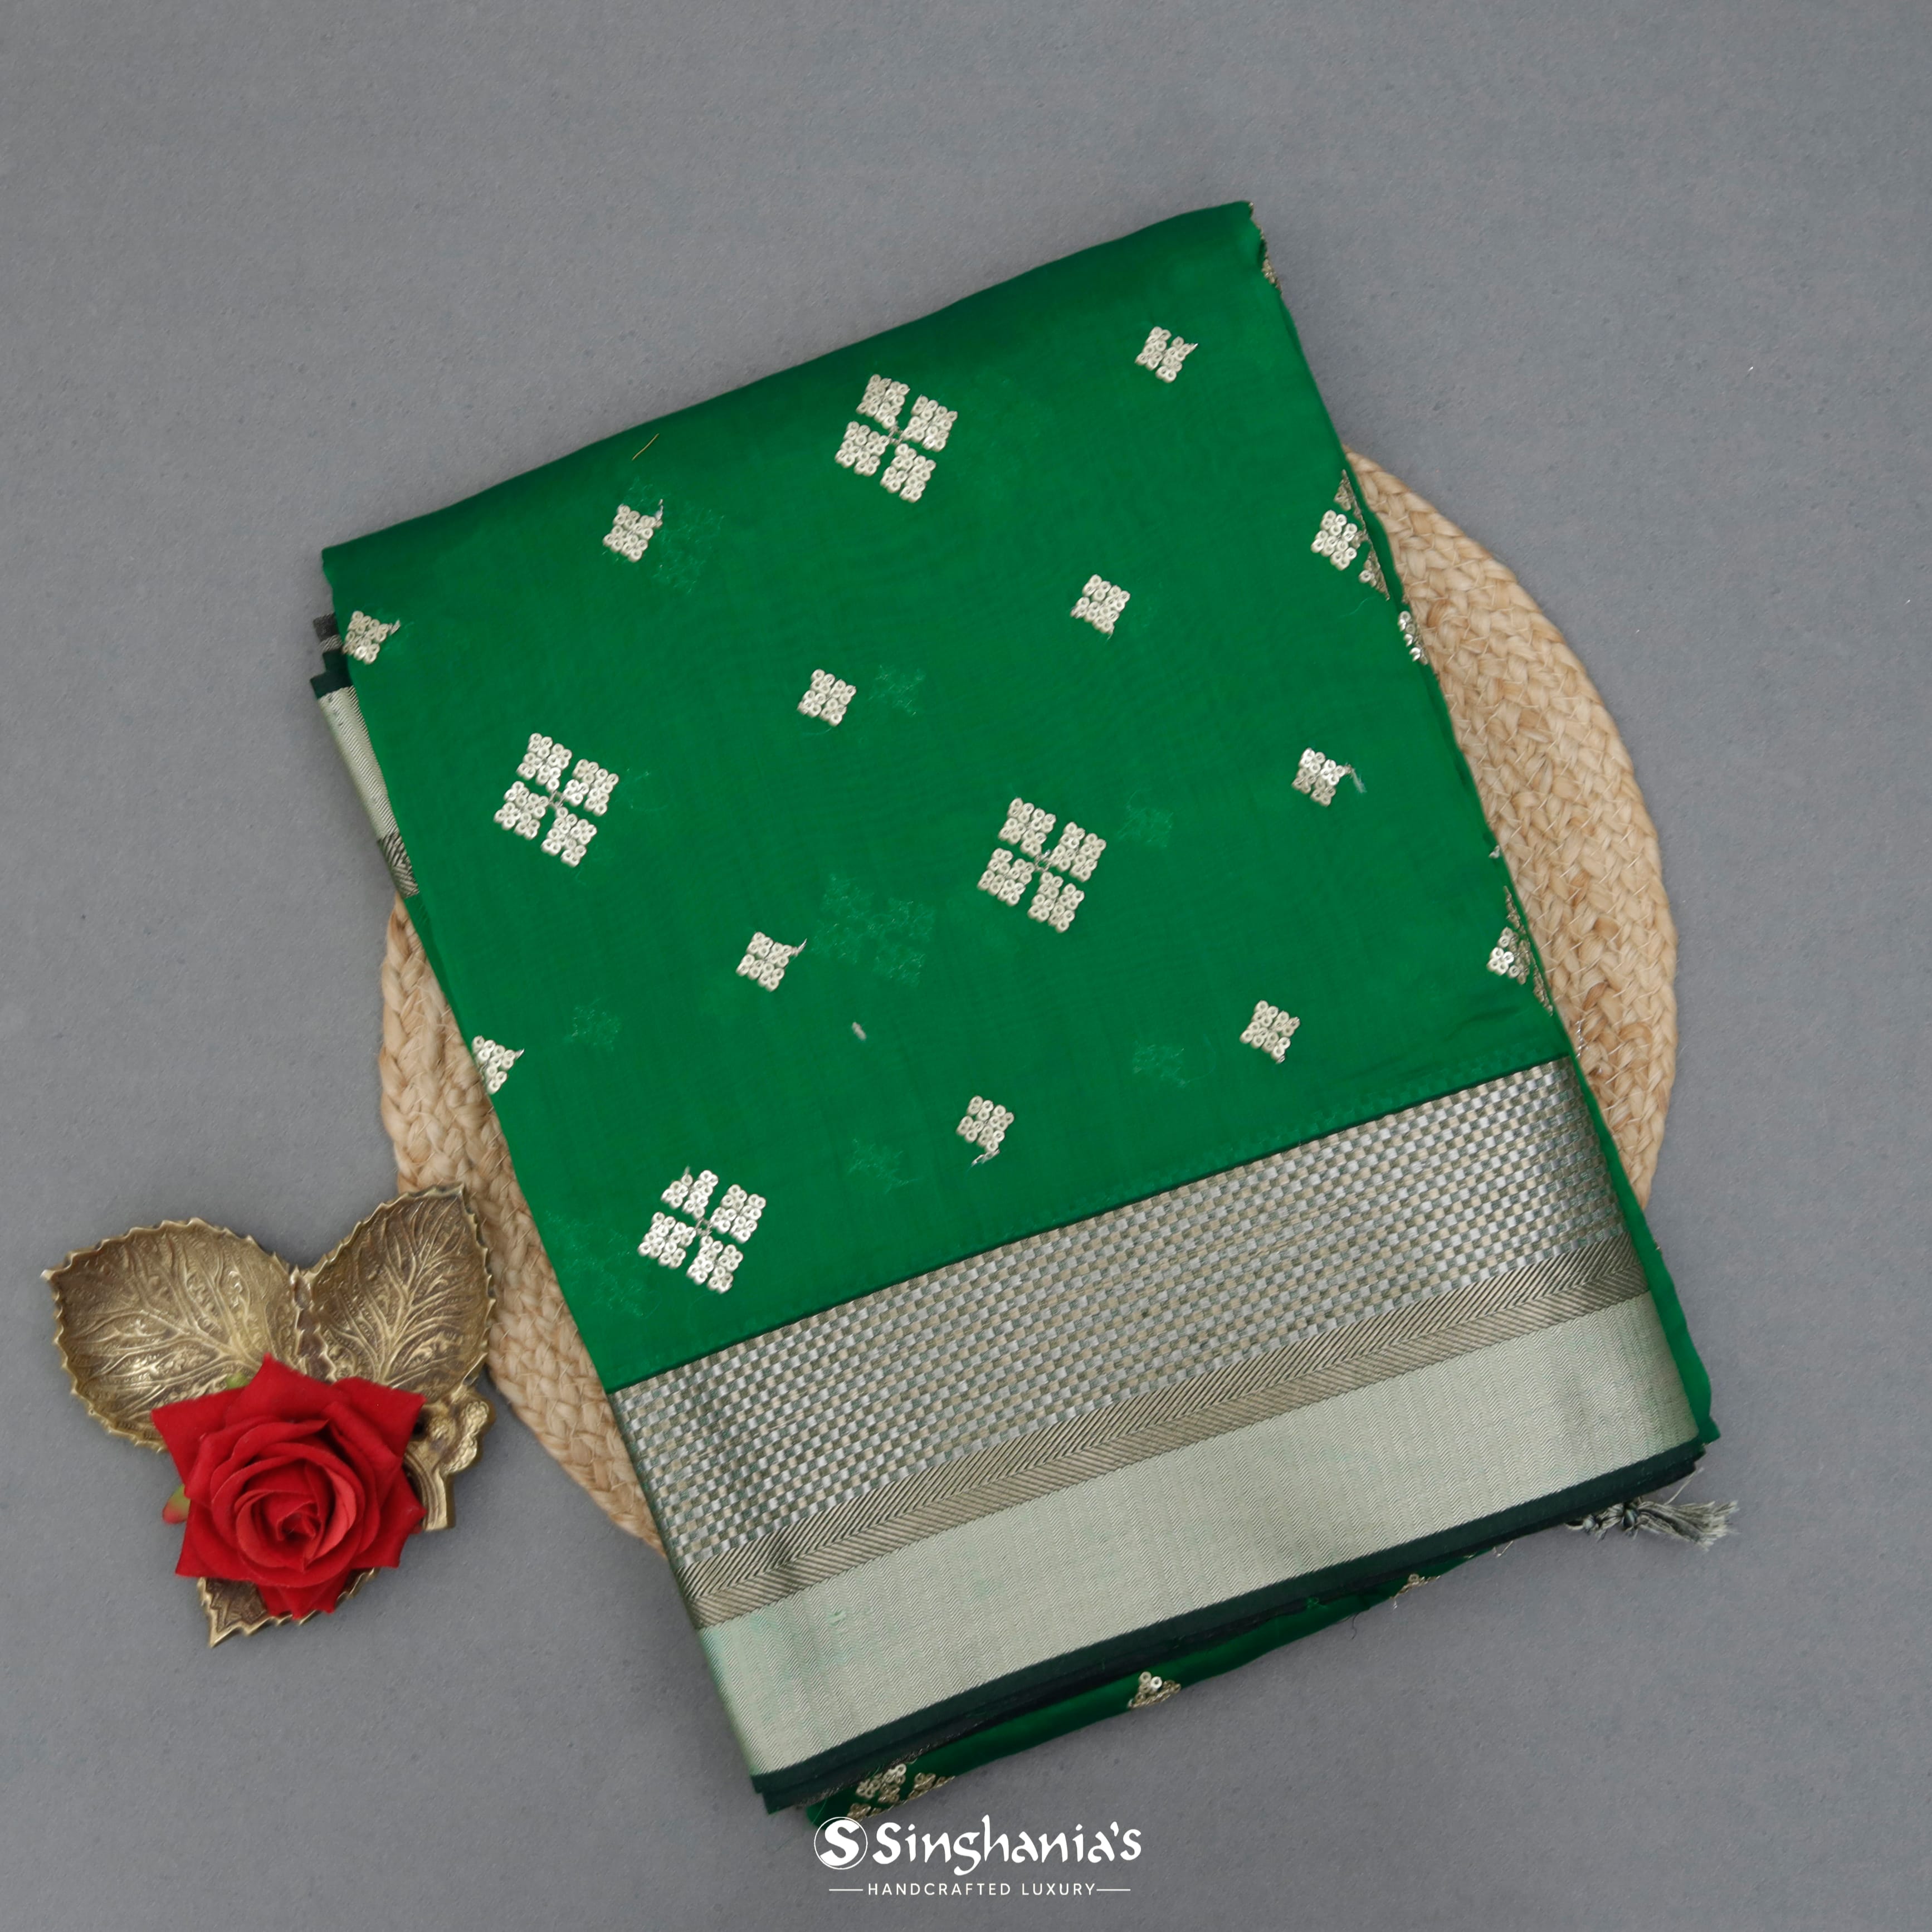 Hunter Green Chanderi Embroidery Silk Saree With Geometrical Pattern